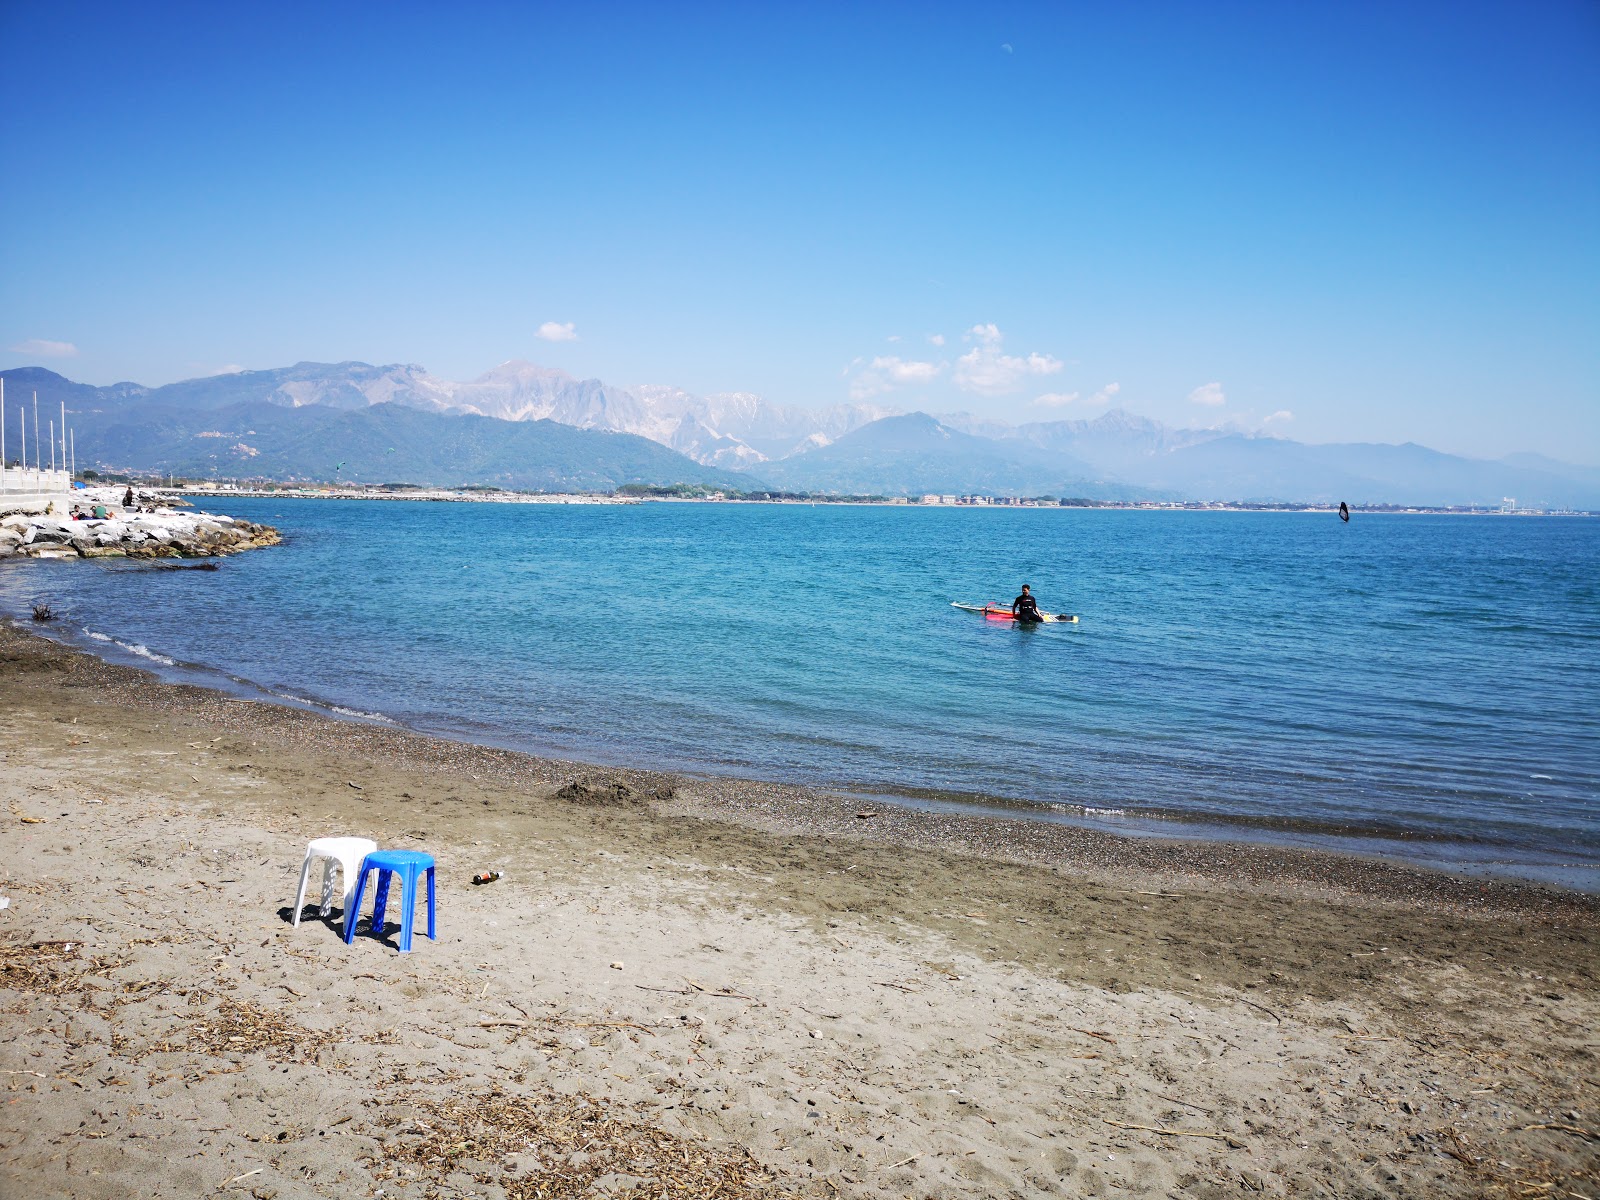 Fotografie cu Spiaggia della Sanita cu o suprafață de apa albastra